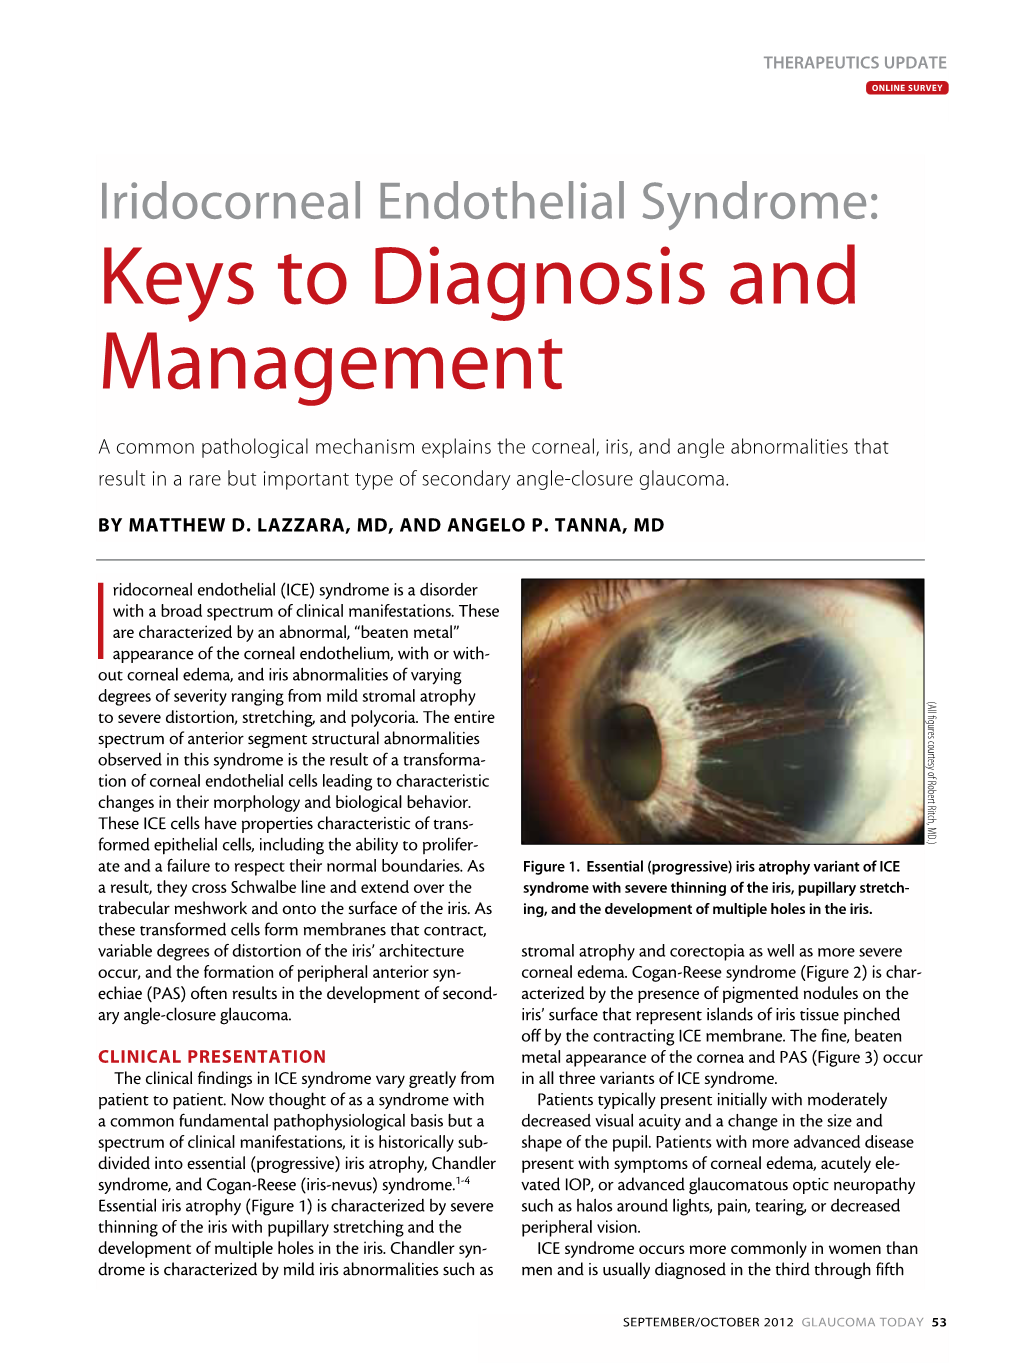 Iridocorneal Endothelial Syndrome: Keys to Diagnosis and Management